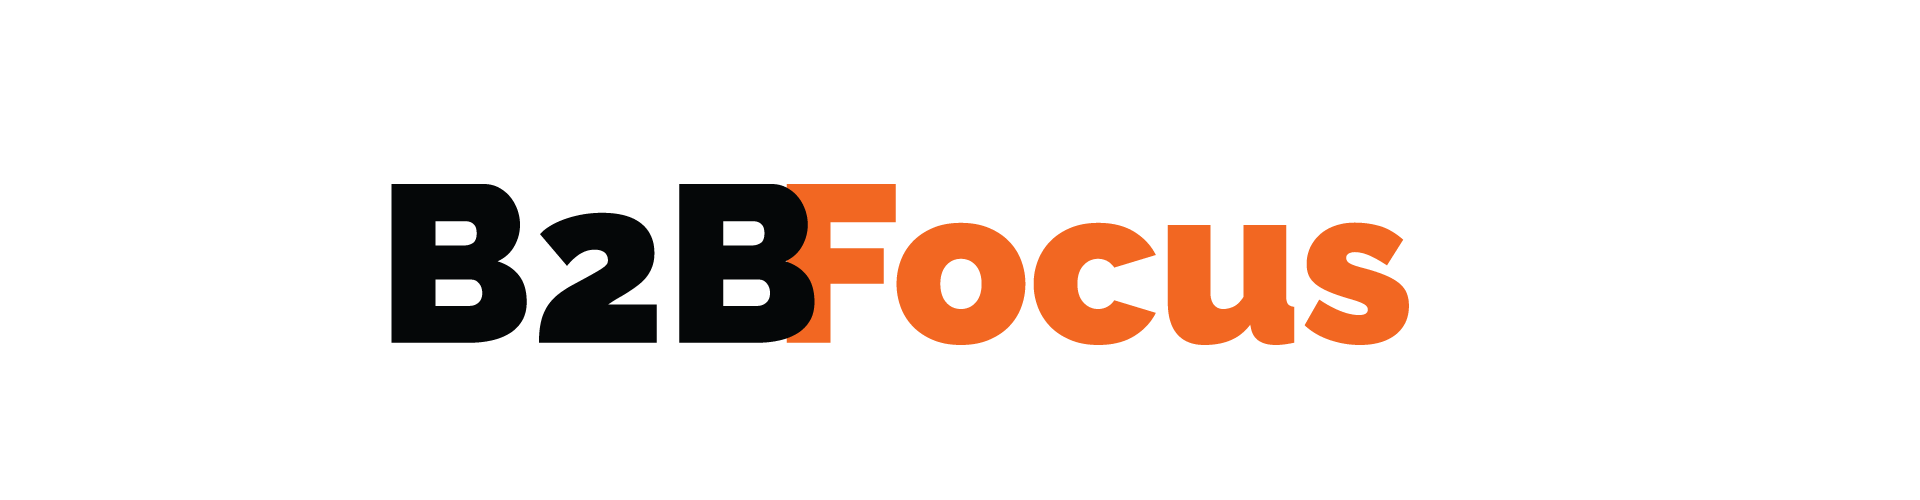 b2b focus enzyme services